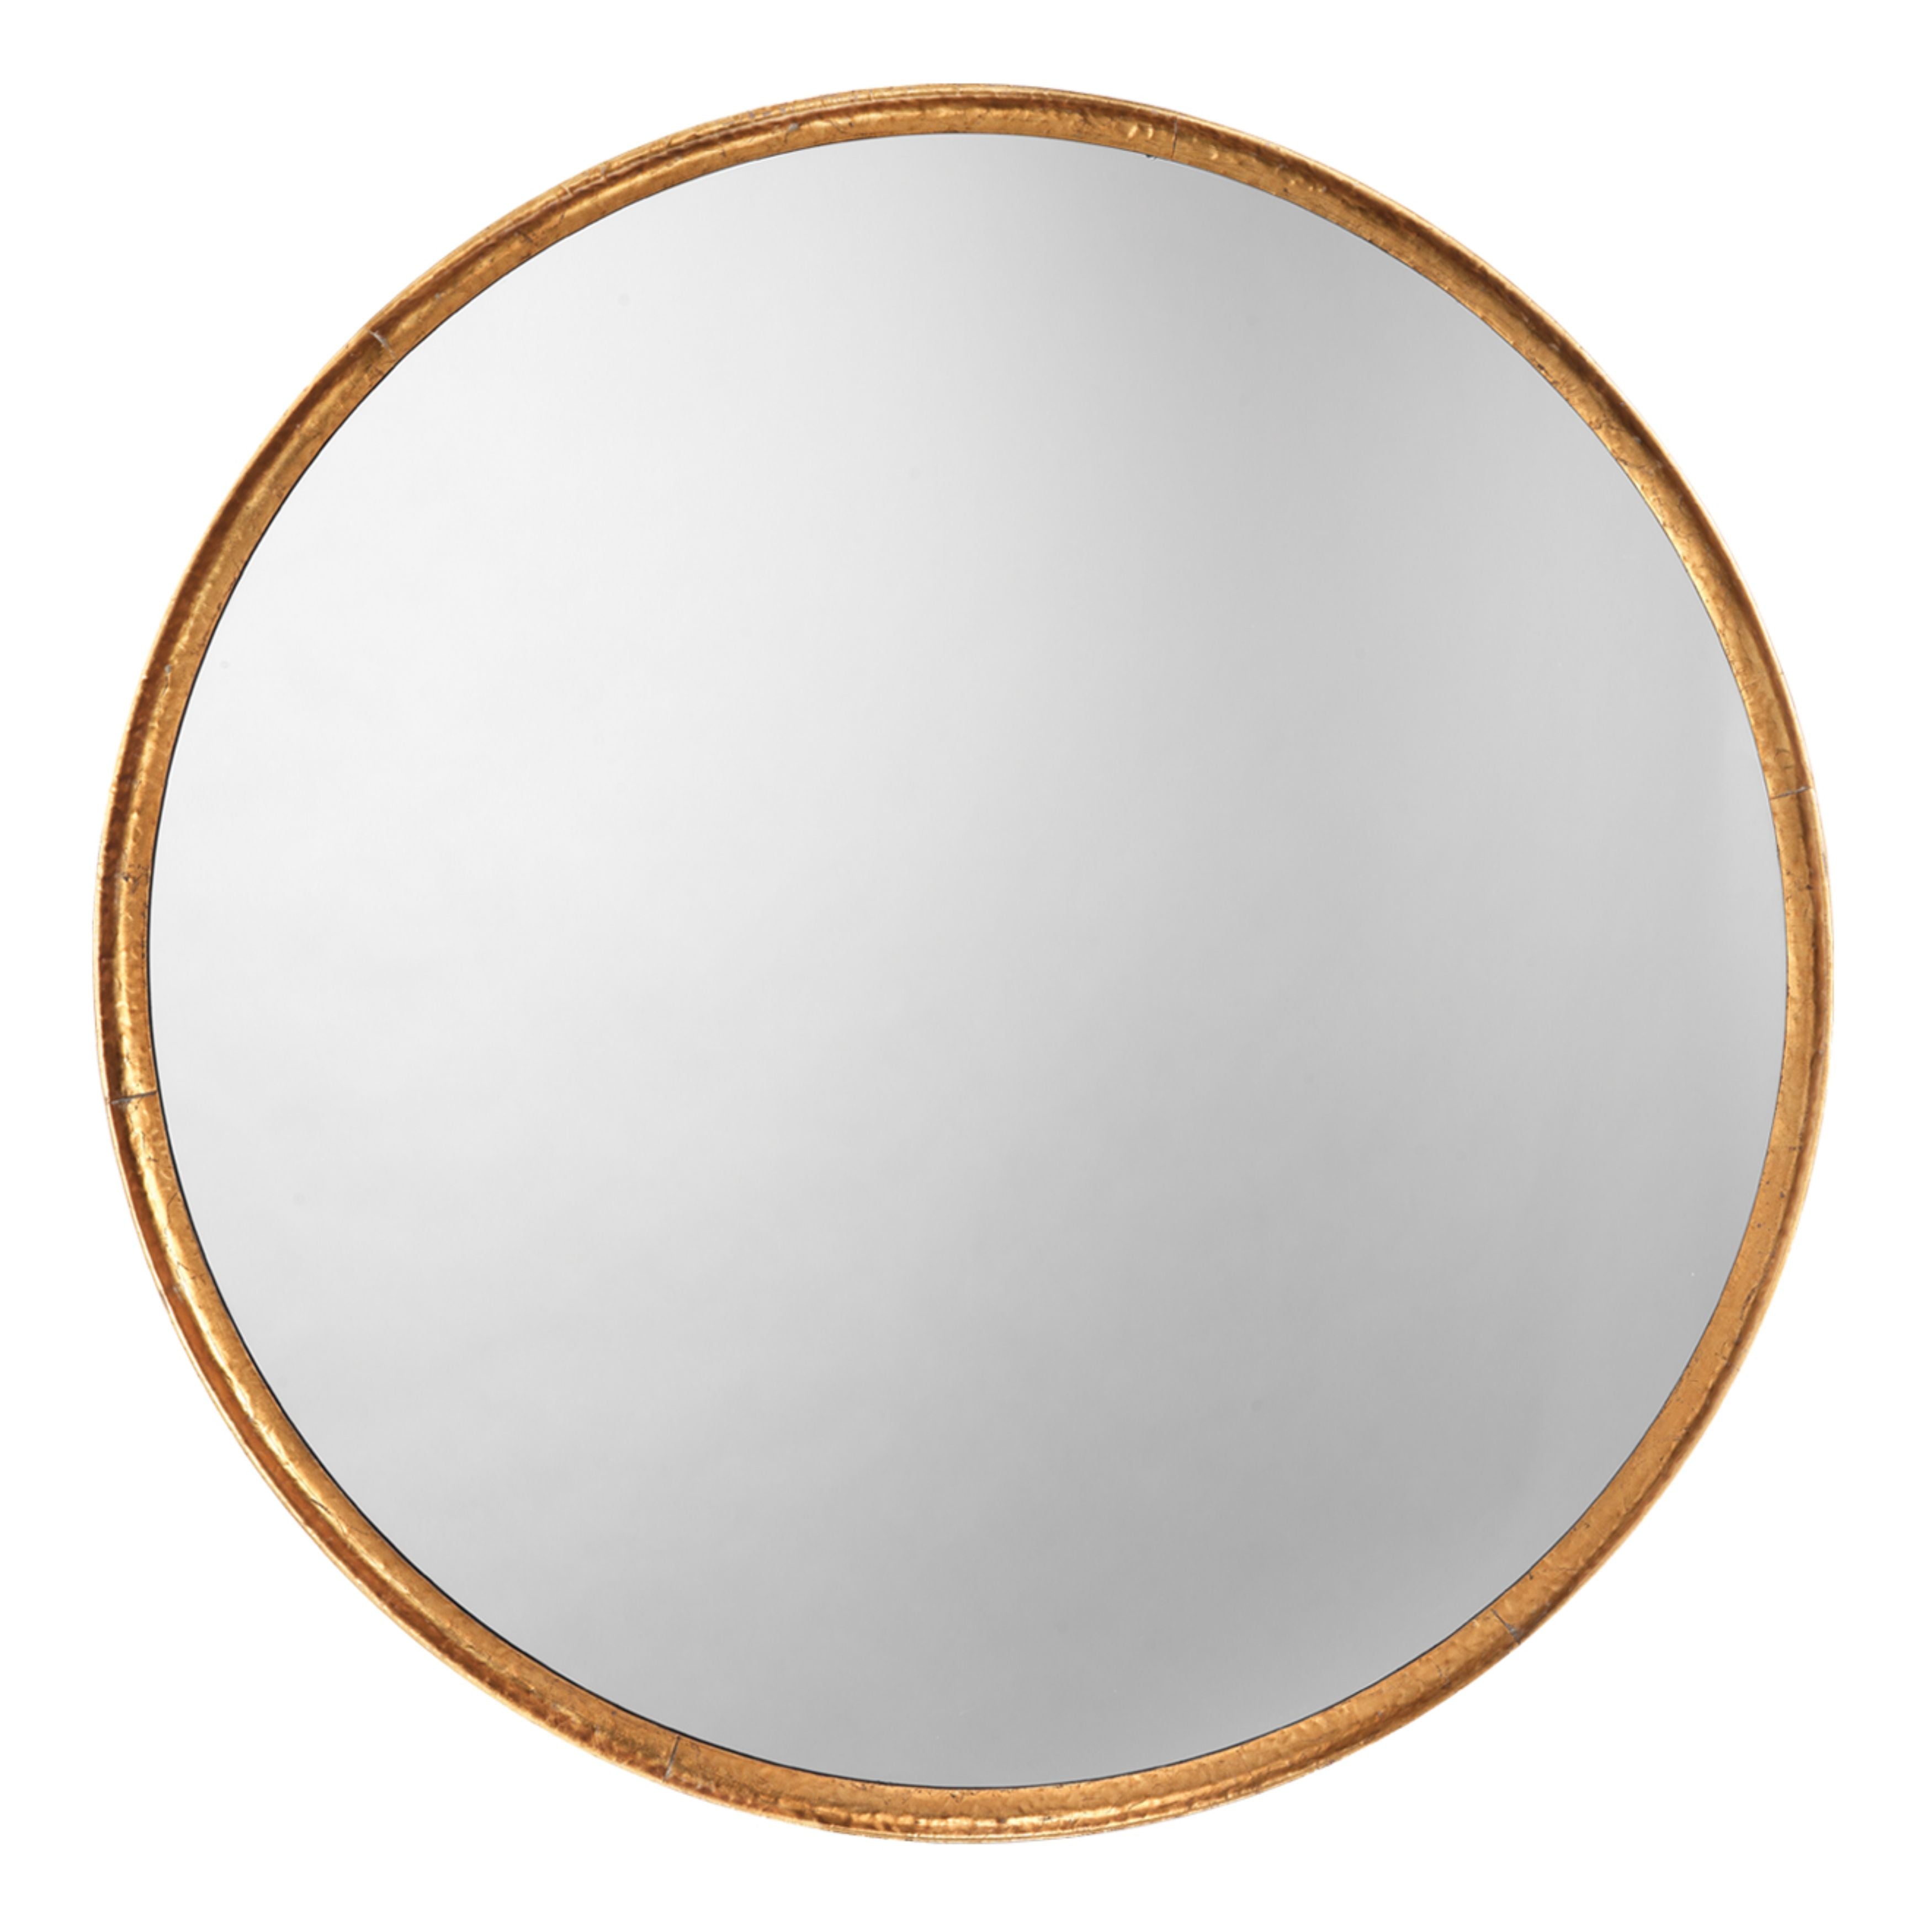 Jamie Young Company - 7REFI-MIGO - Refined Round Mirror - Refined - Gold